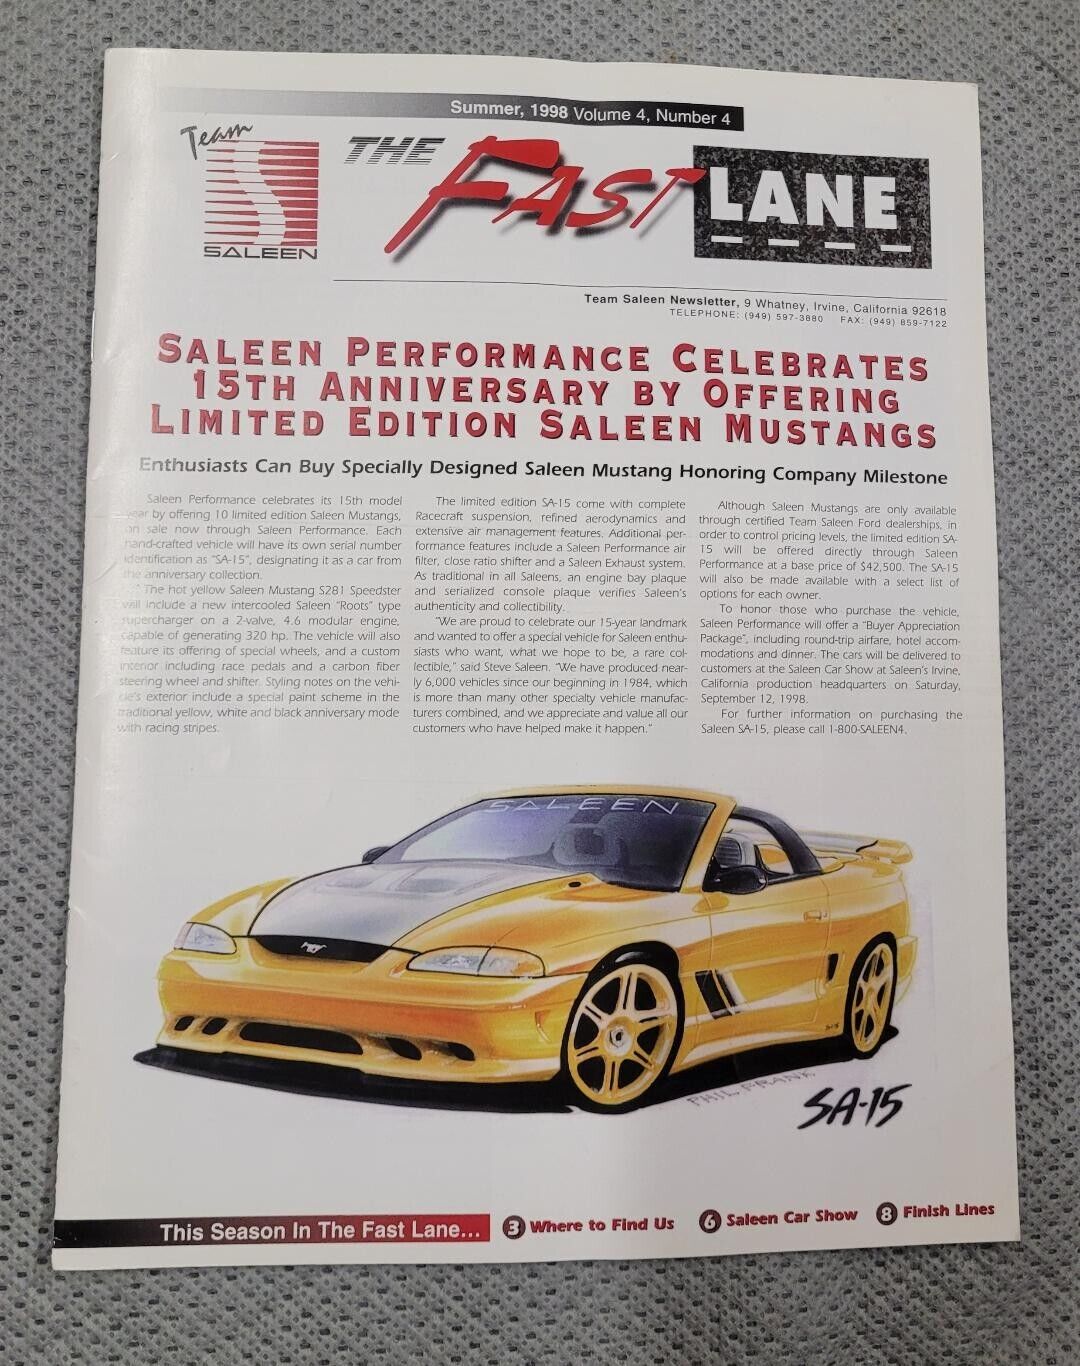 Team Saleen The Fast Lane Summer 1998 Volume 4 Number 4